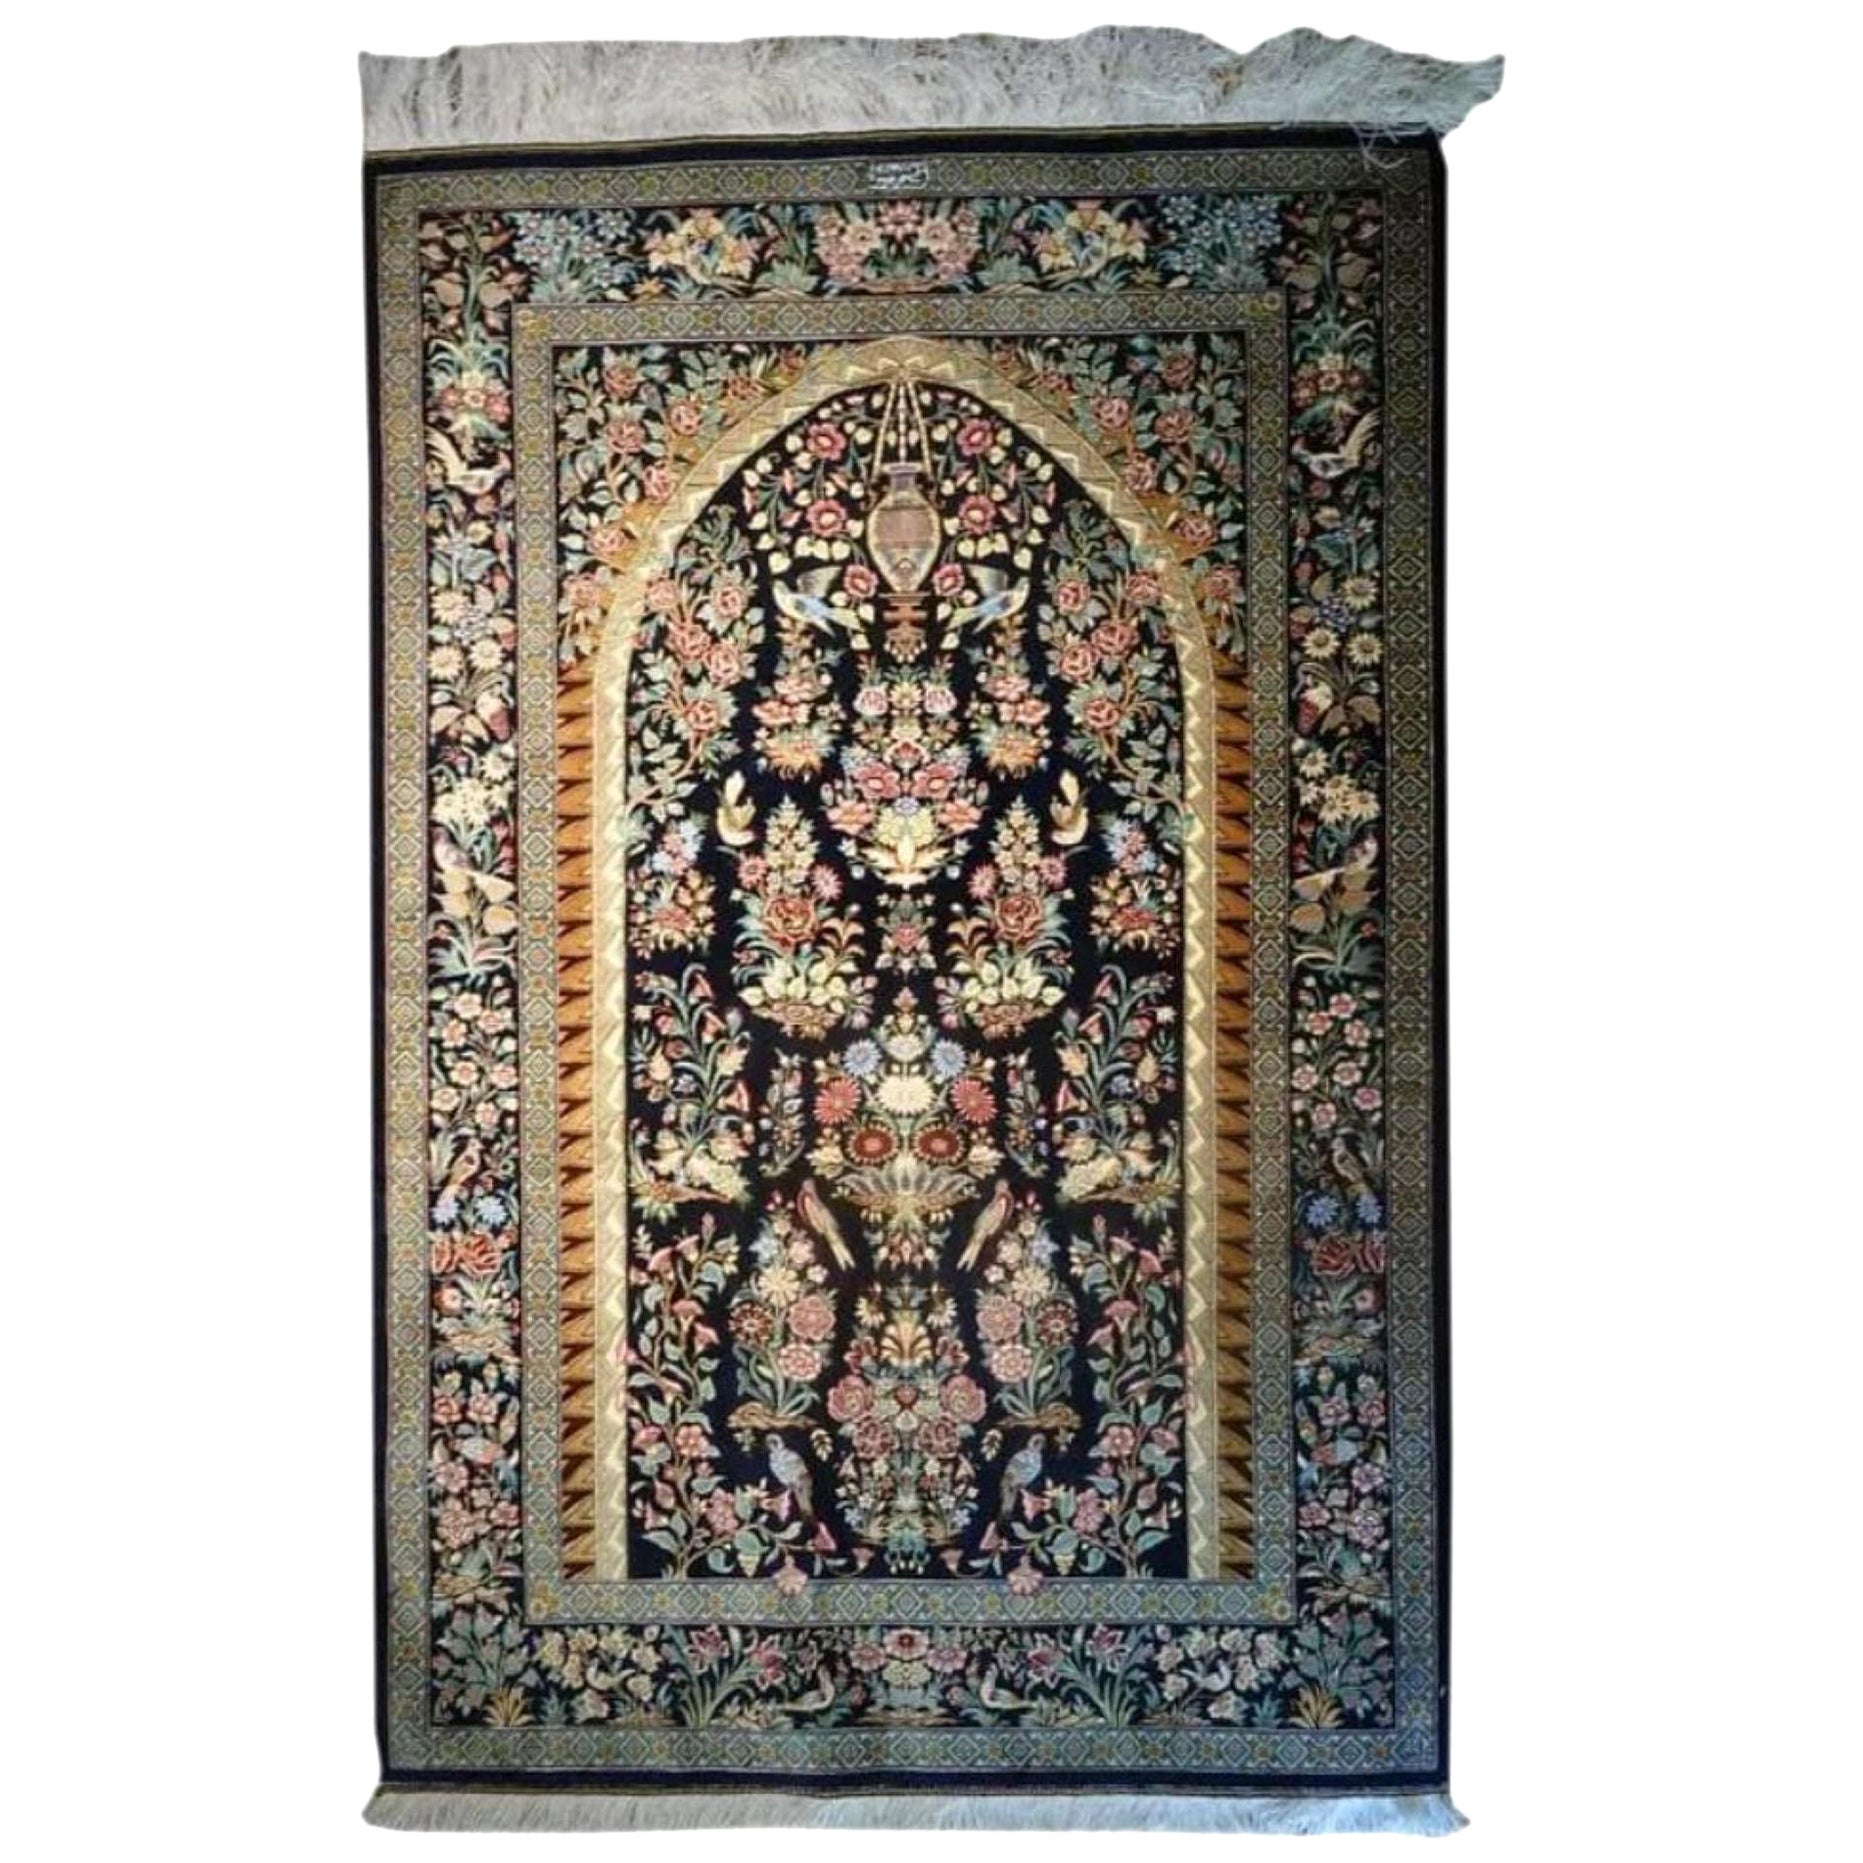 Very fine Persian Silk Qum - 5' x  3.3' For Sale